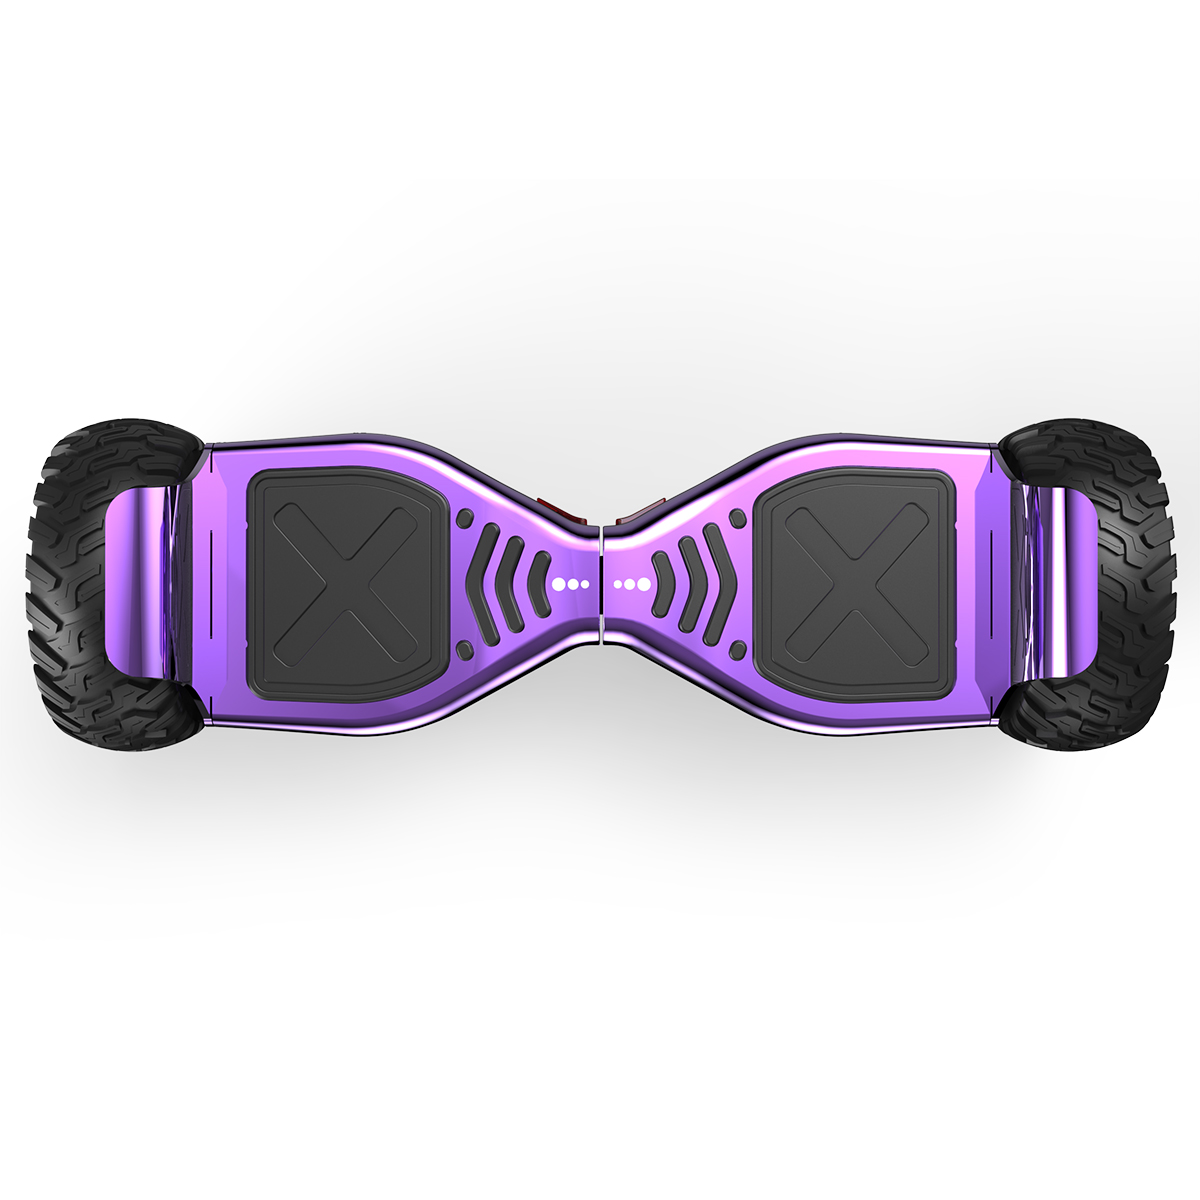 HITWAY HM6 Hoverboard Balance Board violett) Zoll, (8,5